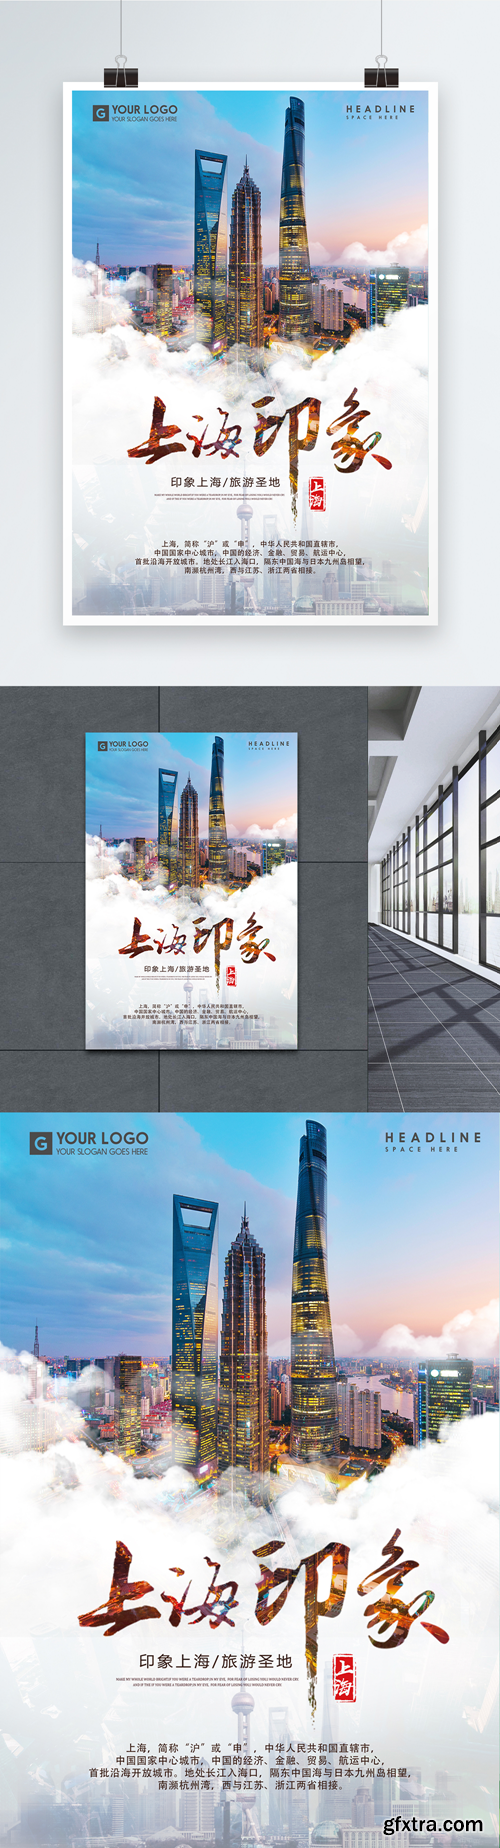 shanghai impression travel posters